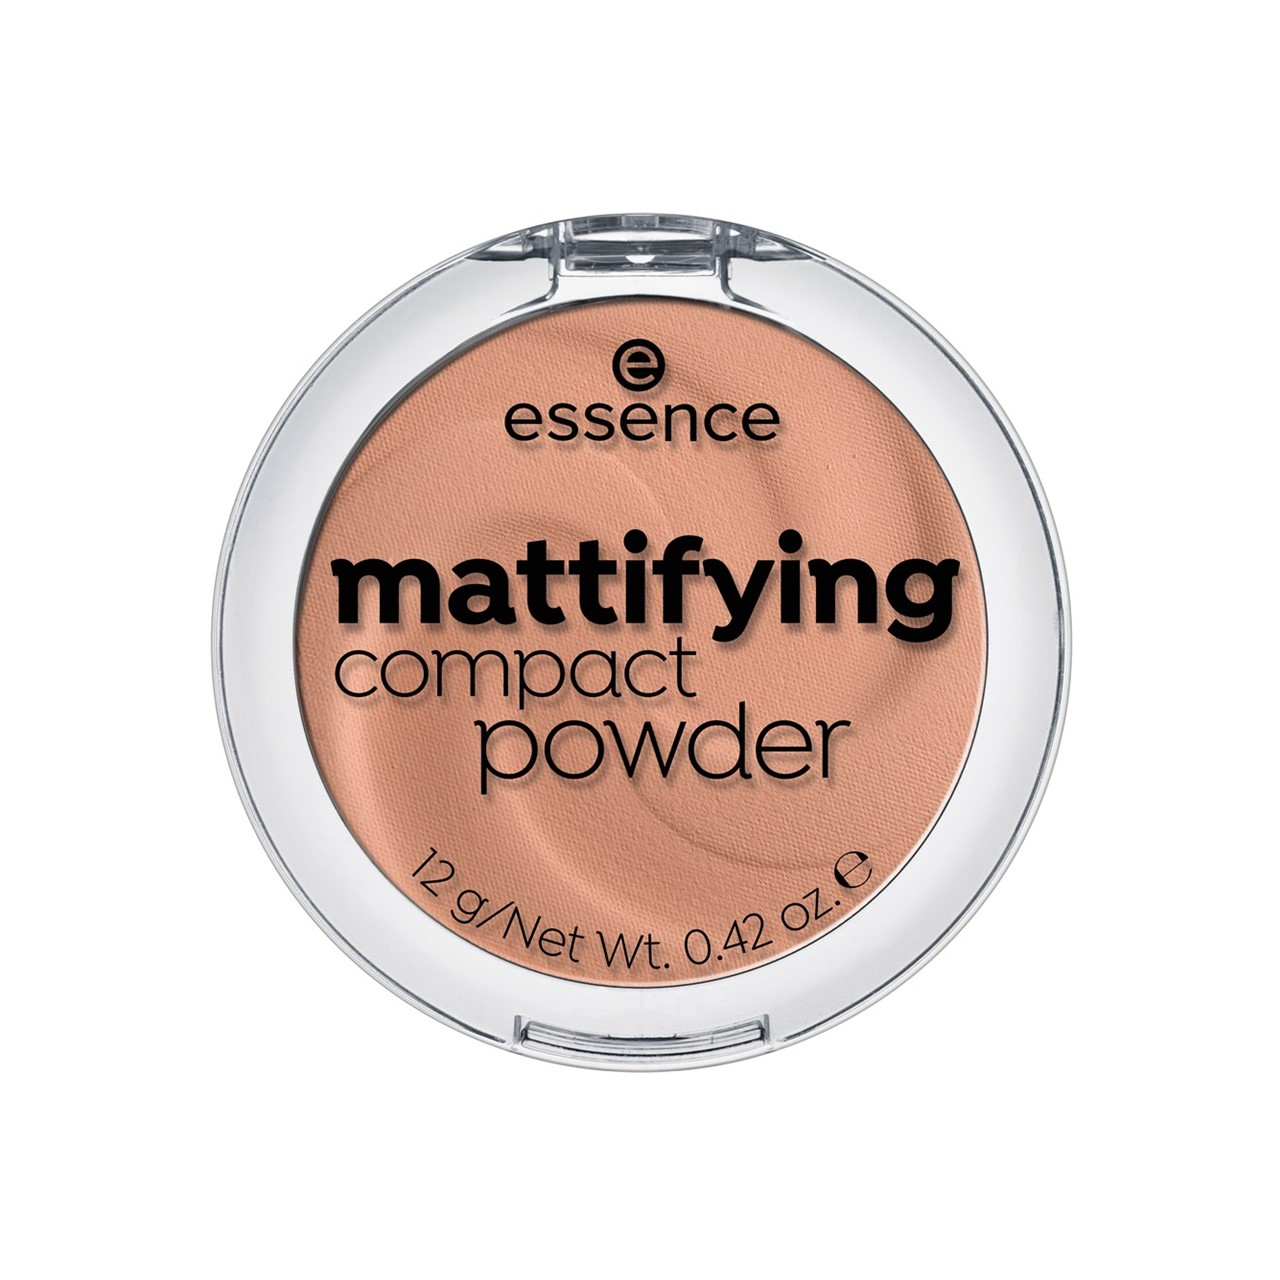 essence Mattifying Compact Powder 02 Soft Beige 12g